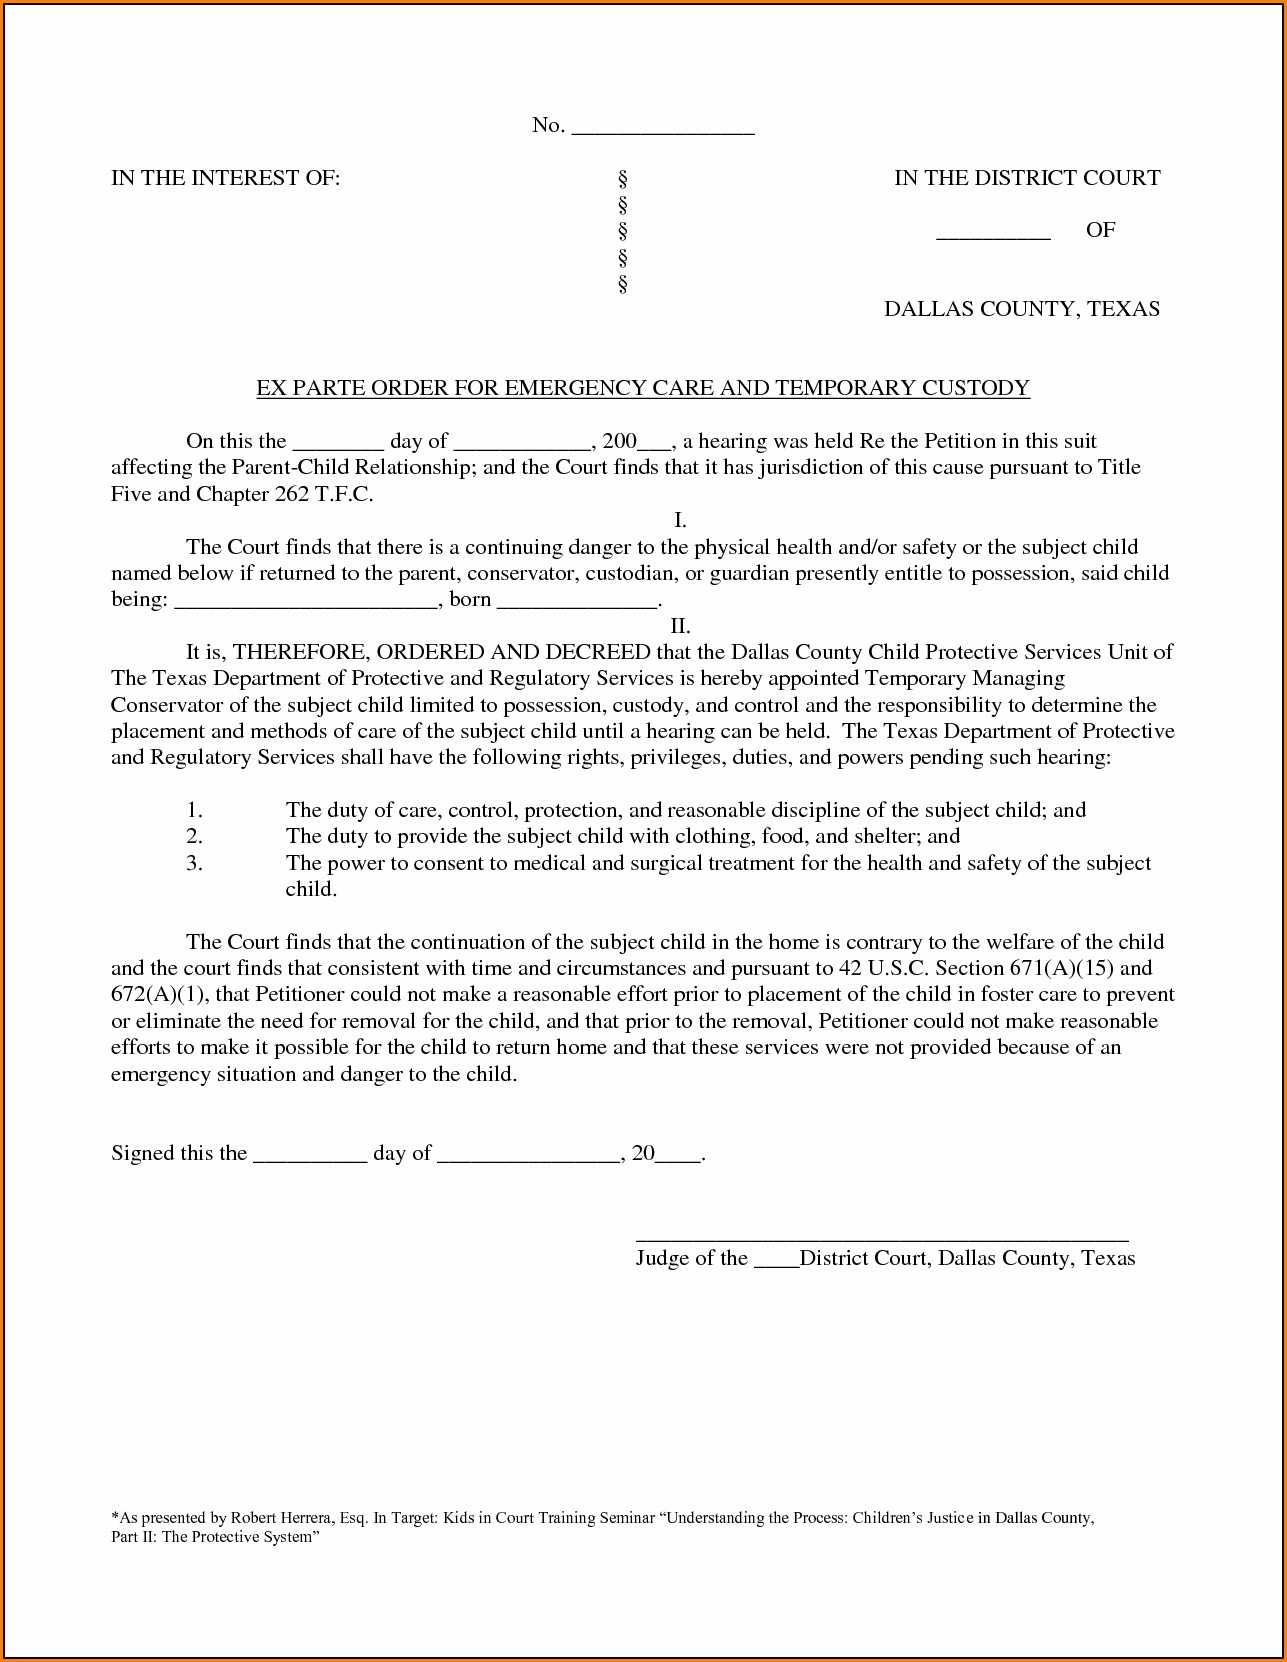 declaration-of-guardianship-form-texas-form-resume-examples-edv1pb1oyq